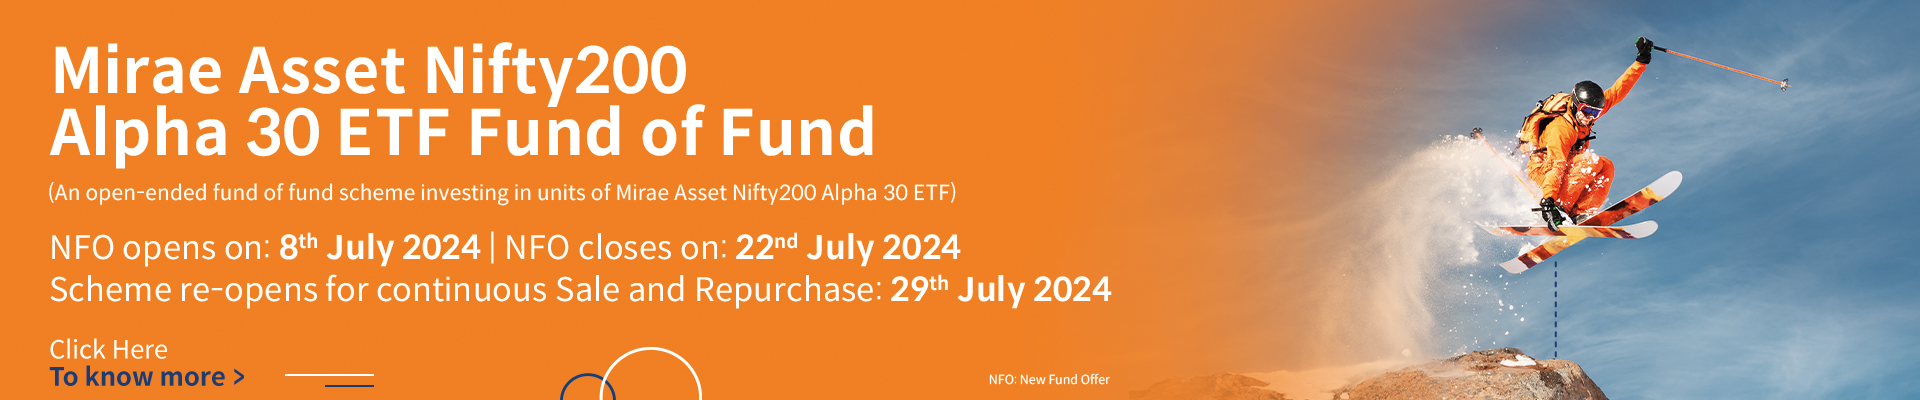 Mirae Asset Nifty200 Alpha 30 ETF Fund of Fund